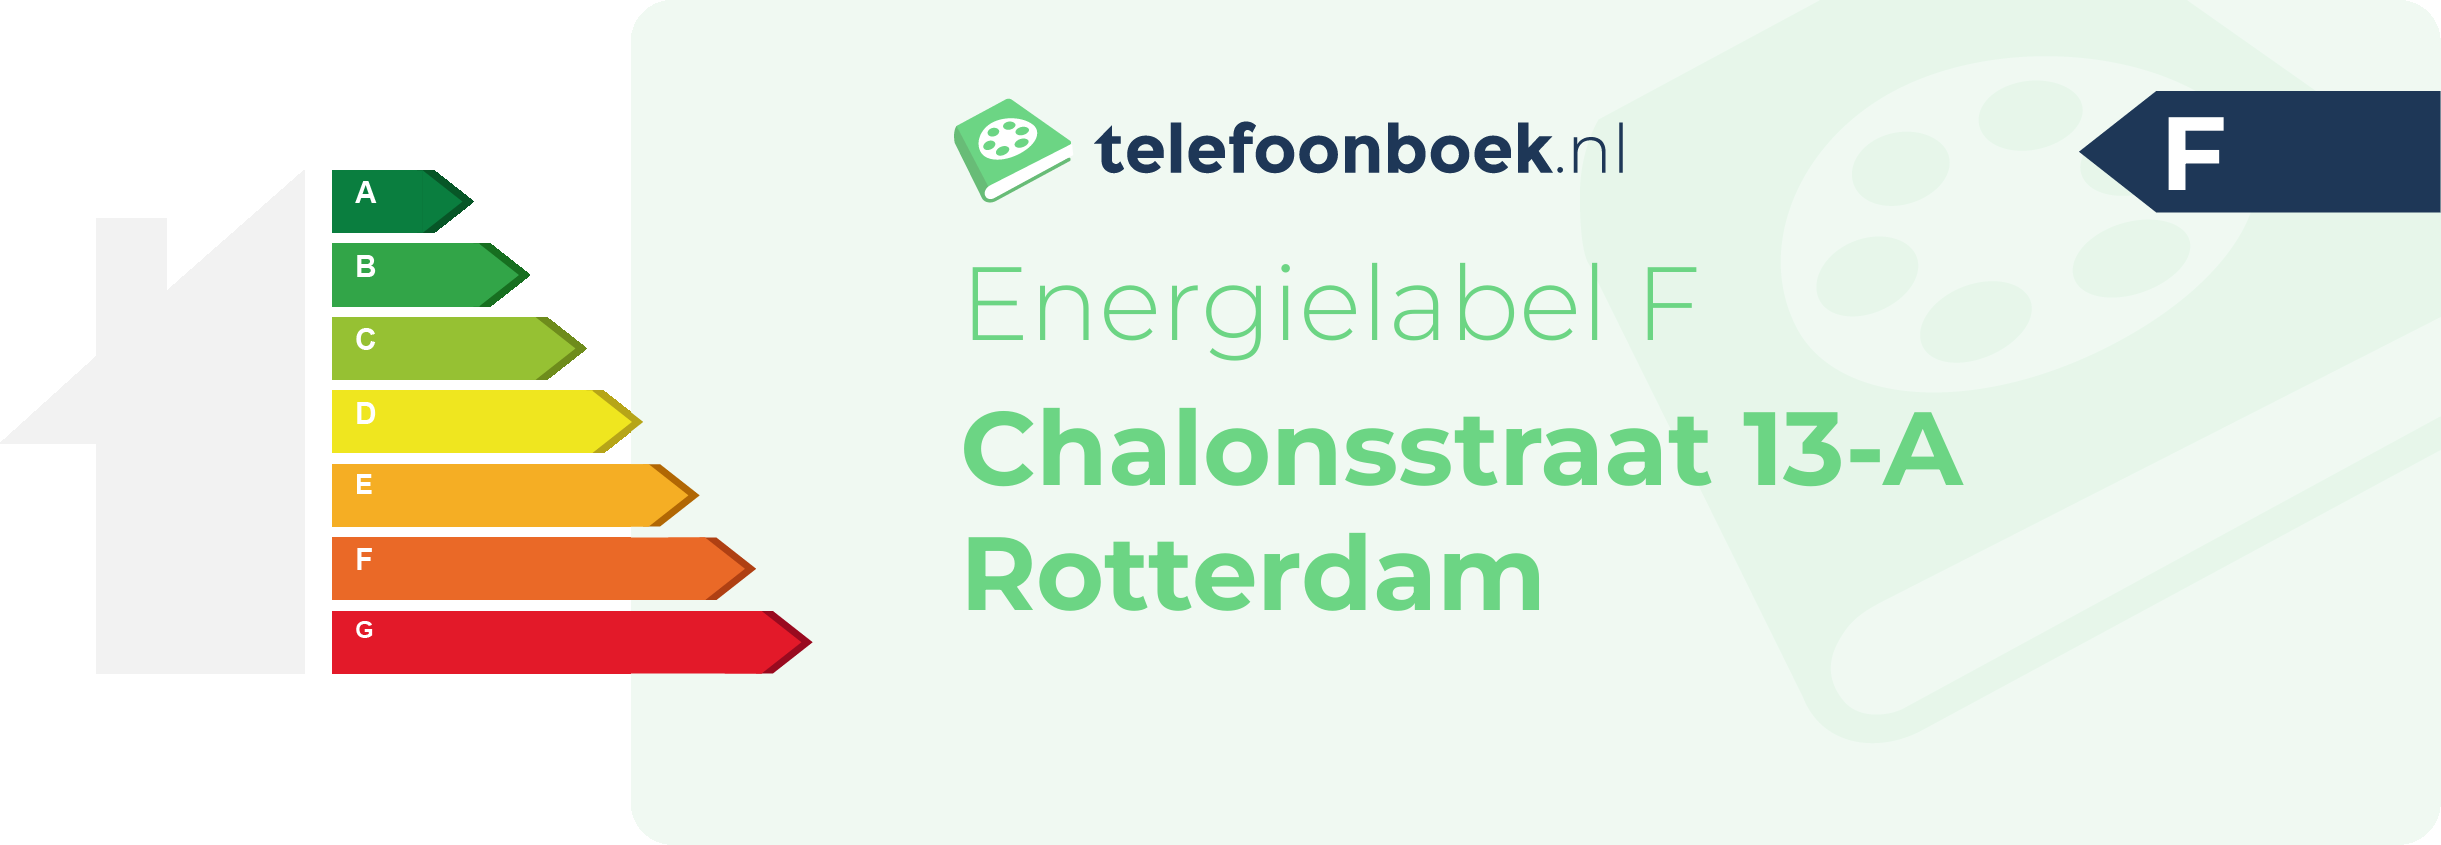 Energielabel Chalonsstraat 13-A Rotterdam